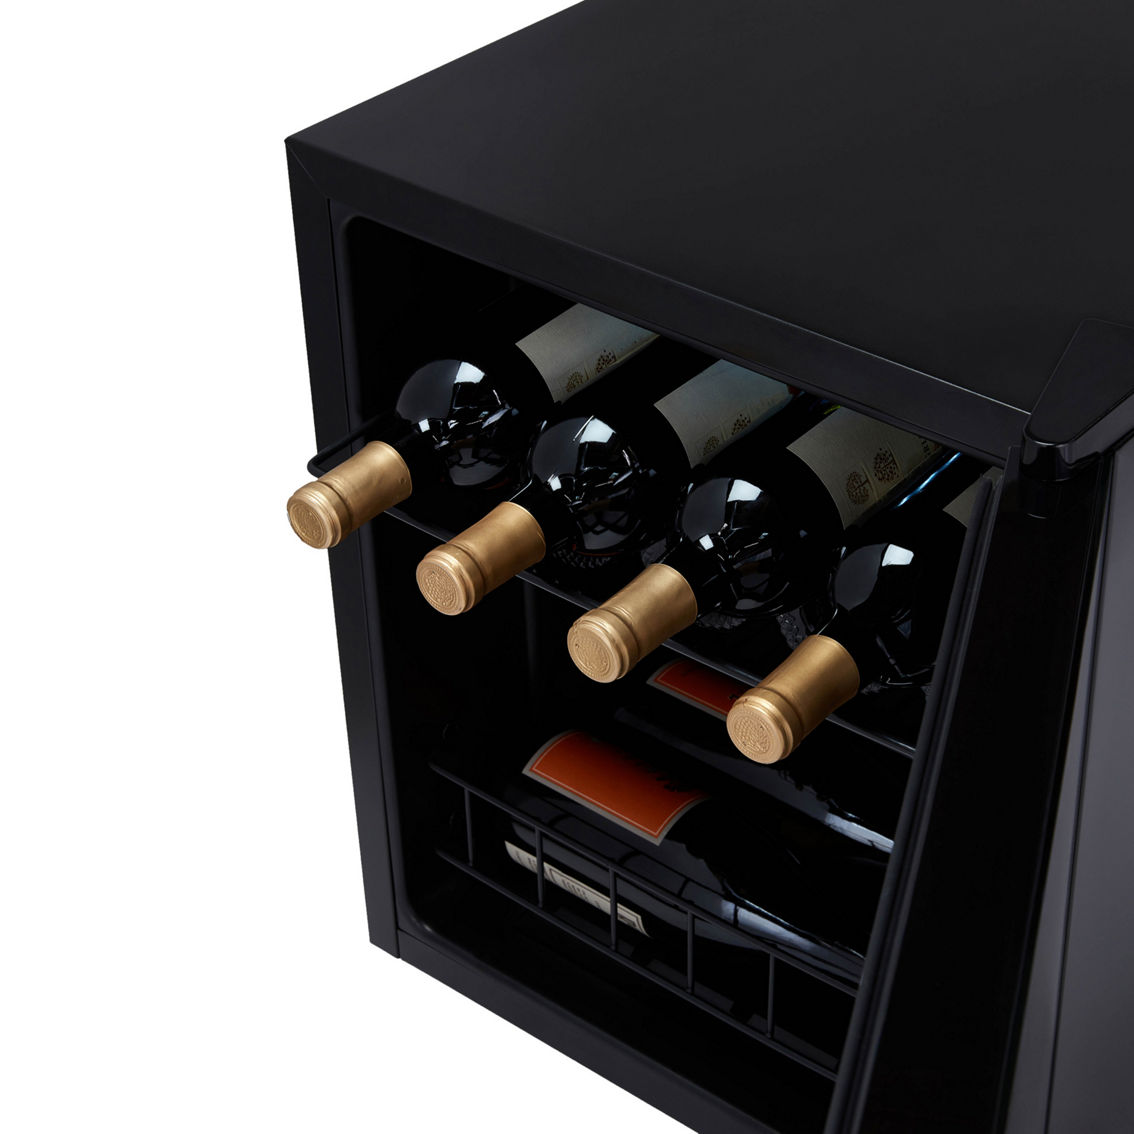 Newair Shadow Series Wine Cooler Refrigerator 16 Bottle Wine Fridge - Image 4 of 10